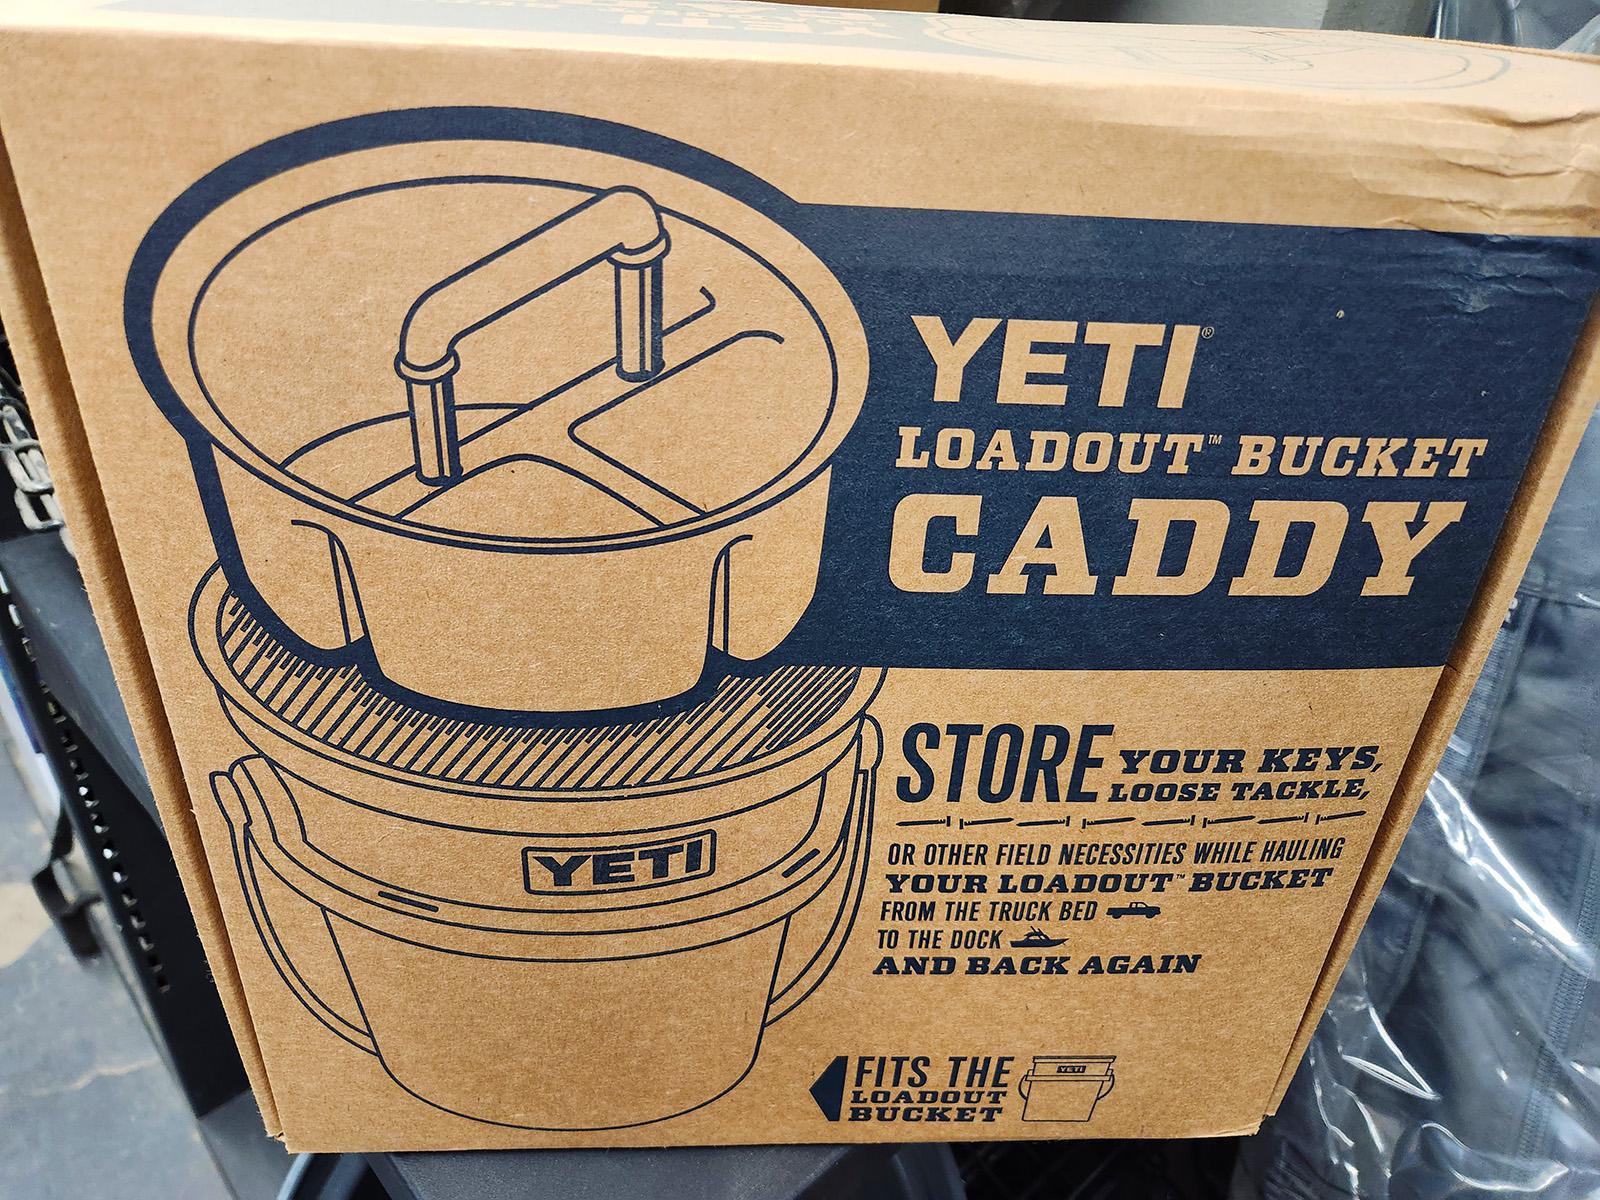 Yeti LoadOut Bucket Caddy